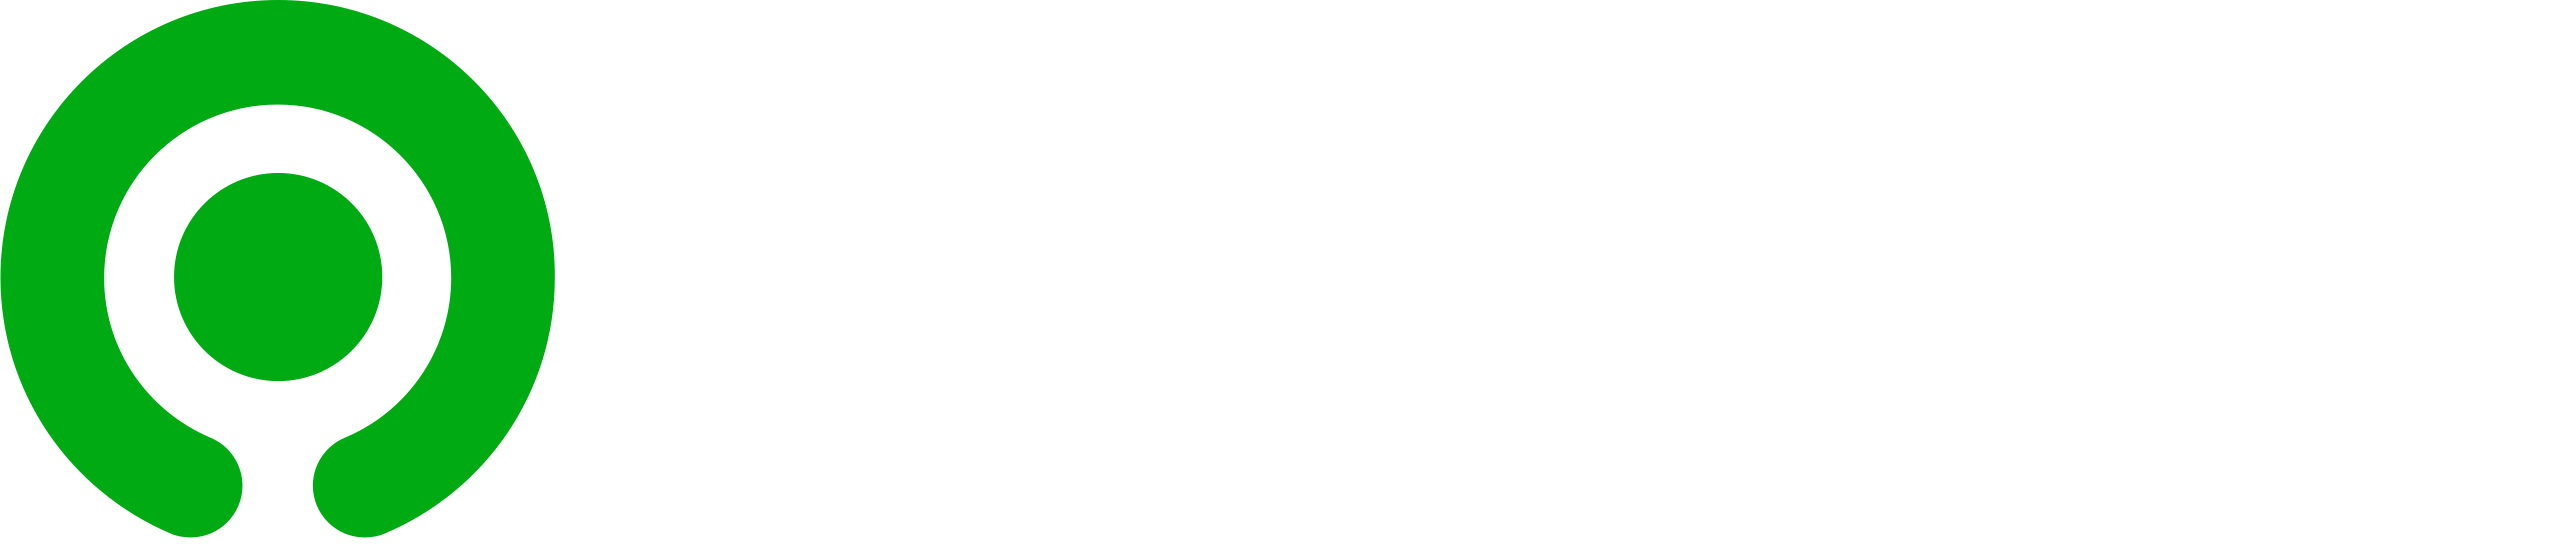 Gojek Open Source Logo